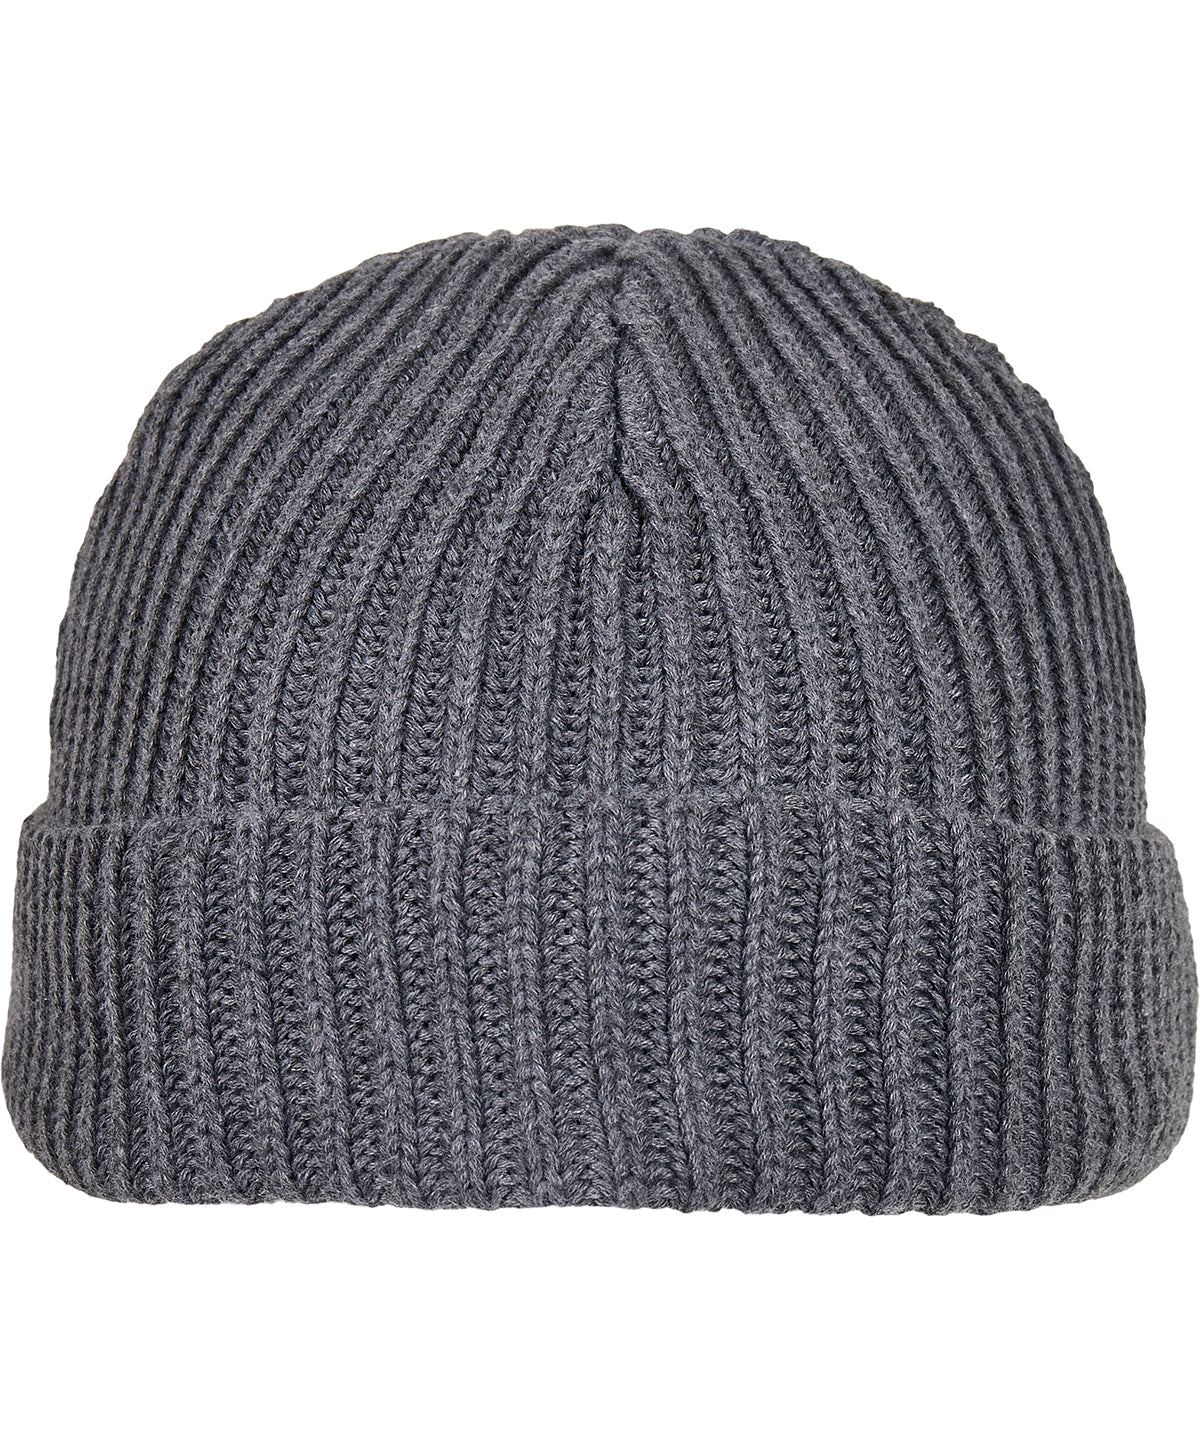 Personalised Hats - Dark Grey Build Your Brand Recycled yarn fisherman beanie